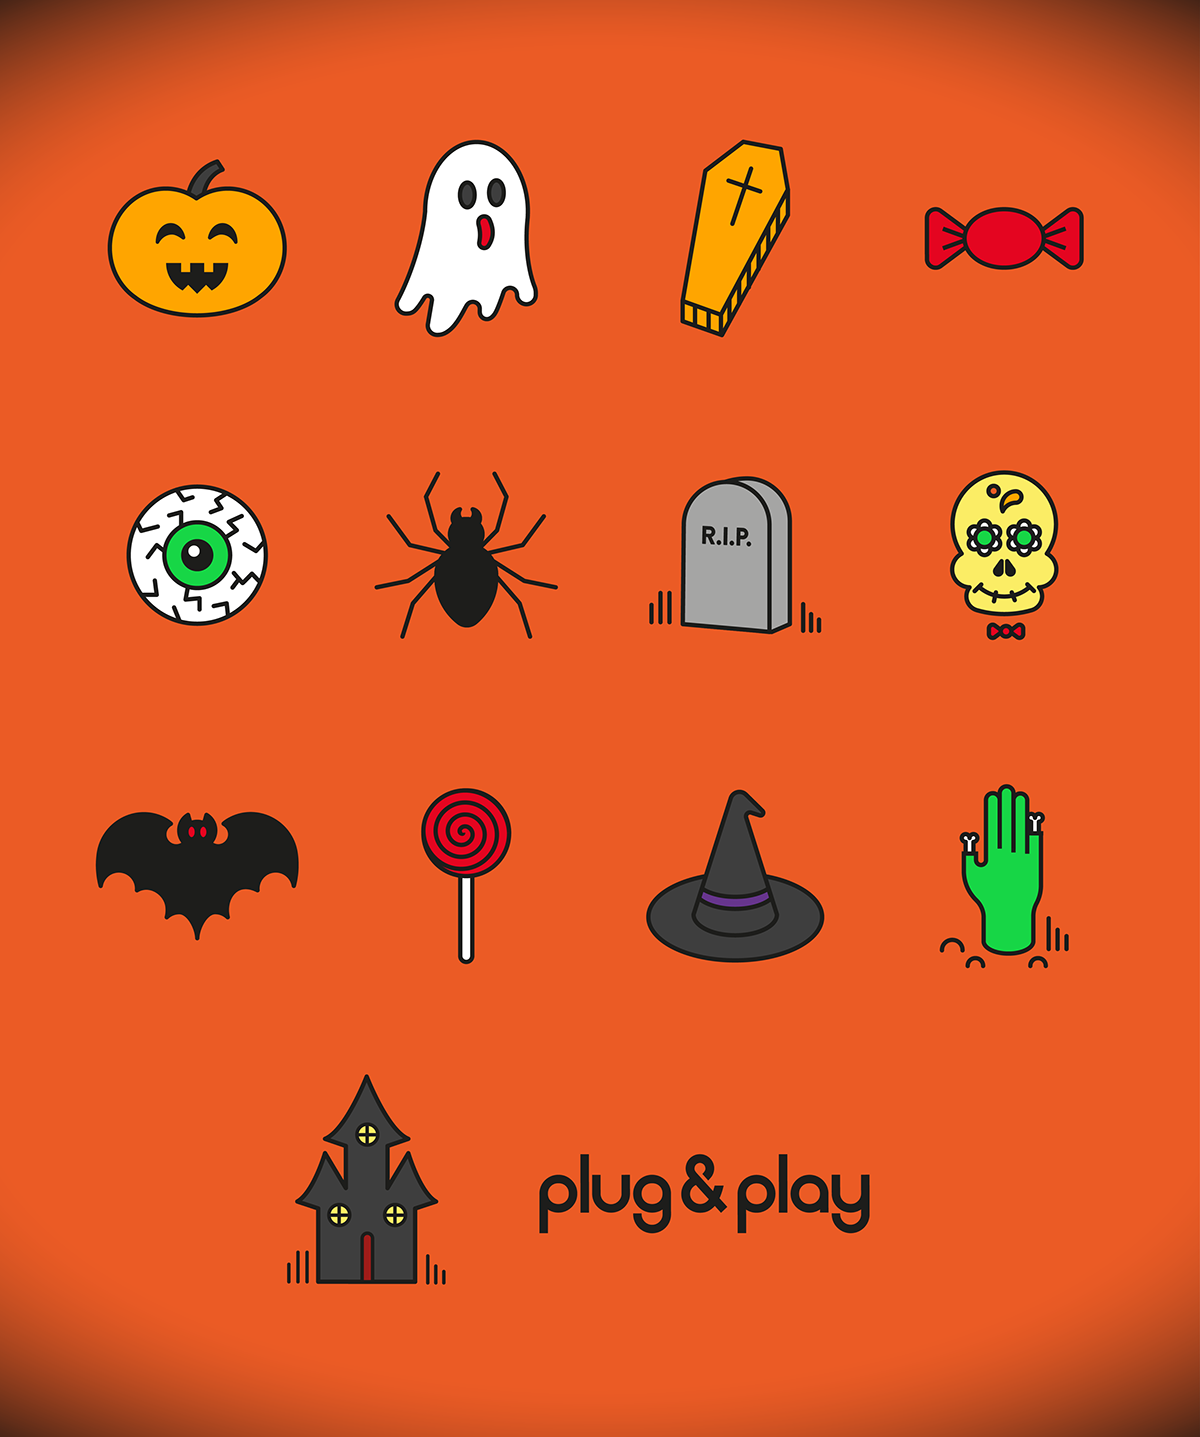 Halloween Icon free download skull pumpkin grave Candy lollipop zombie ghost bat spider eye witch